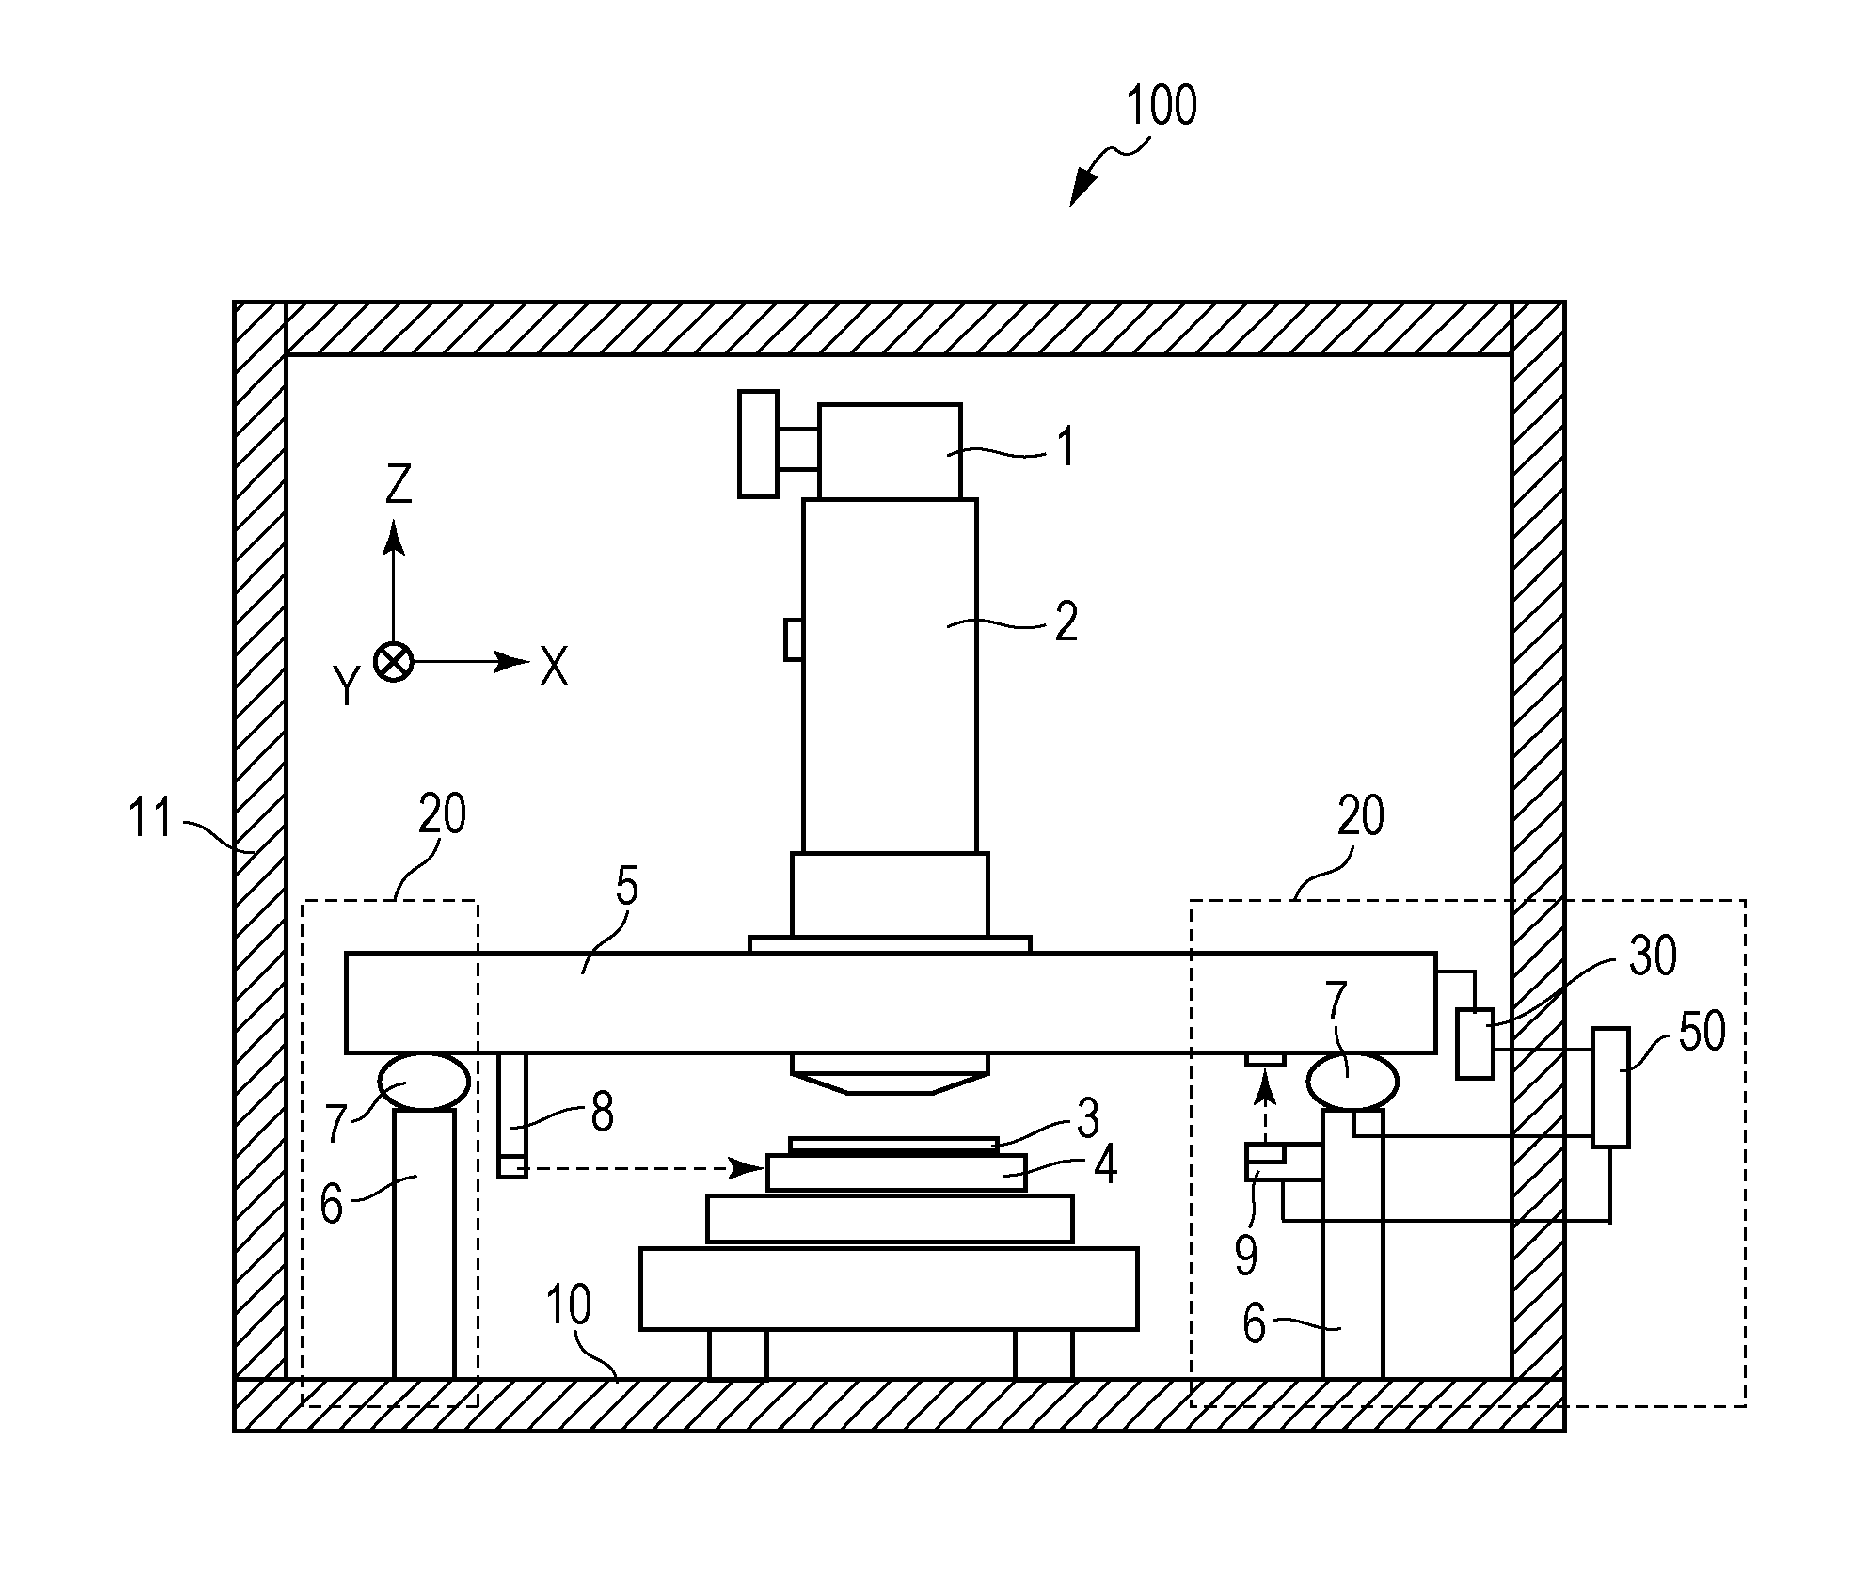 Vibration isolation apparatus, method of isolating vibration, lithography apparatus, and method of producing device